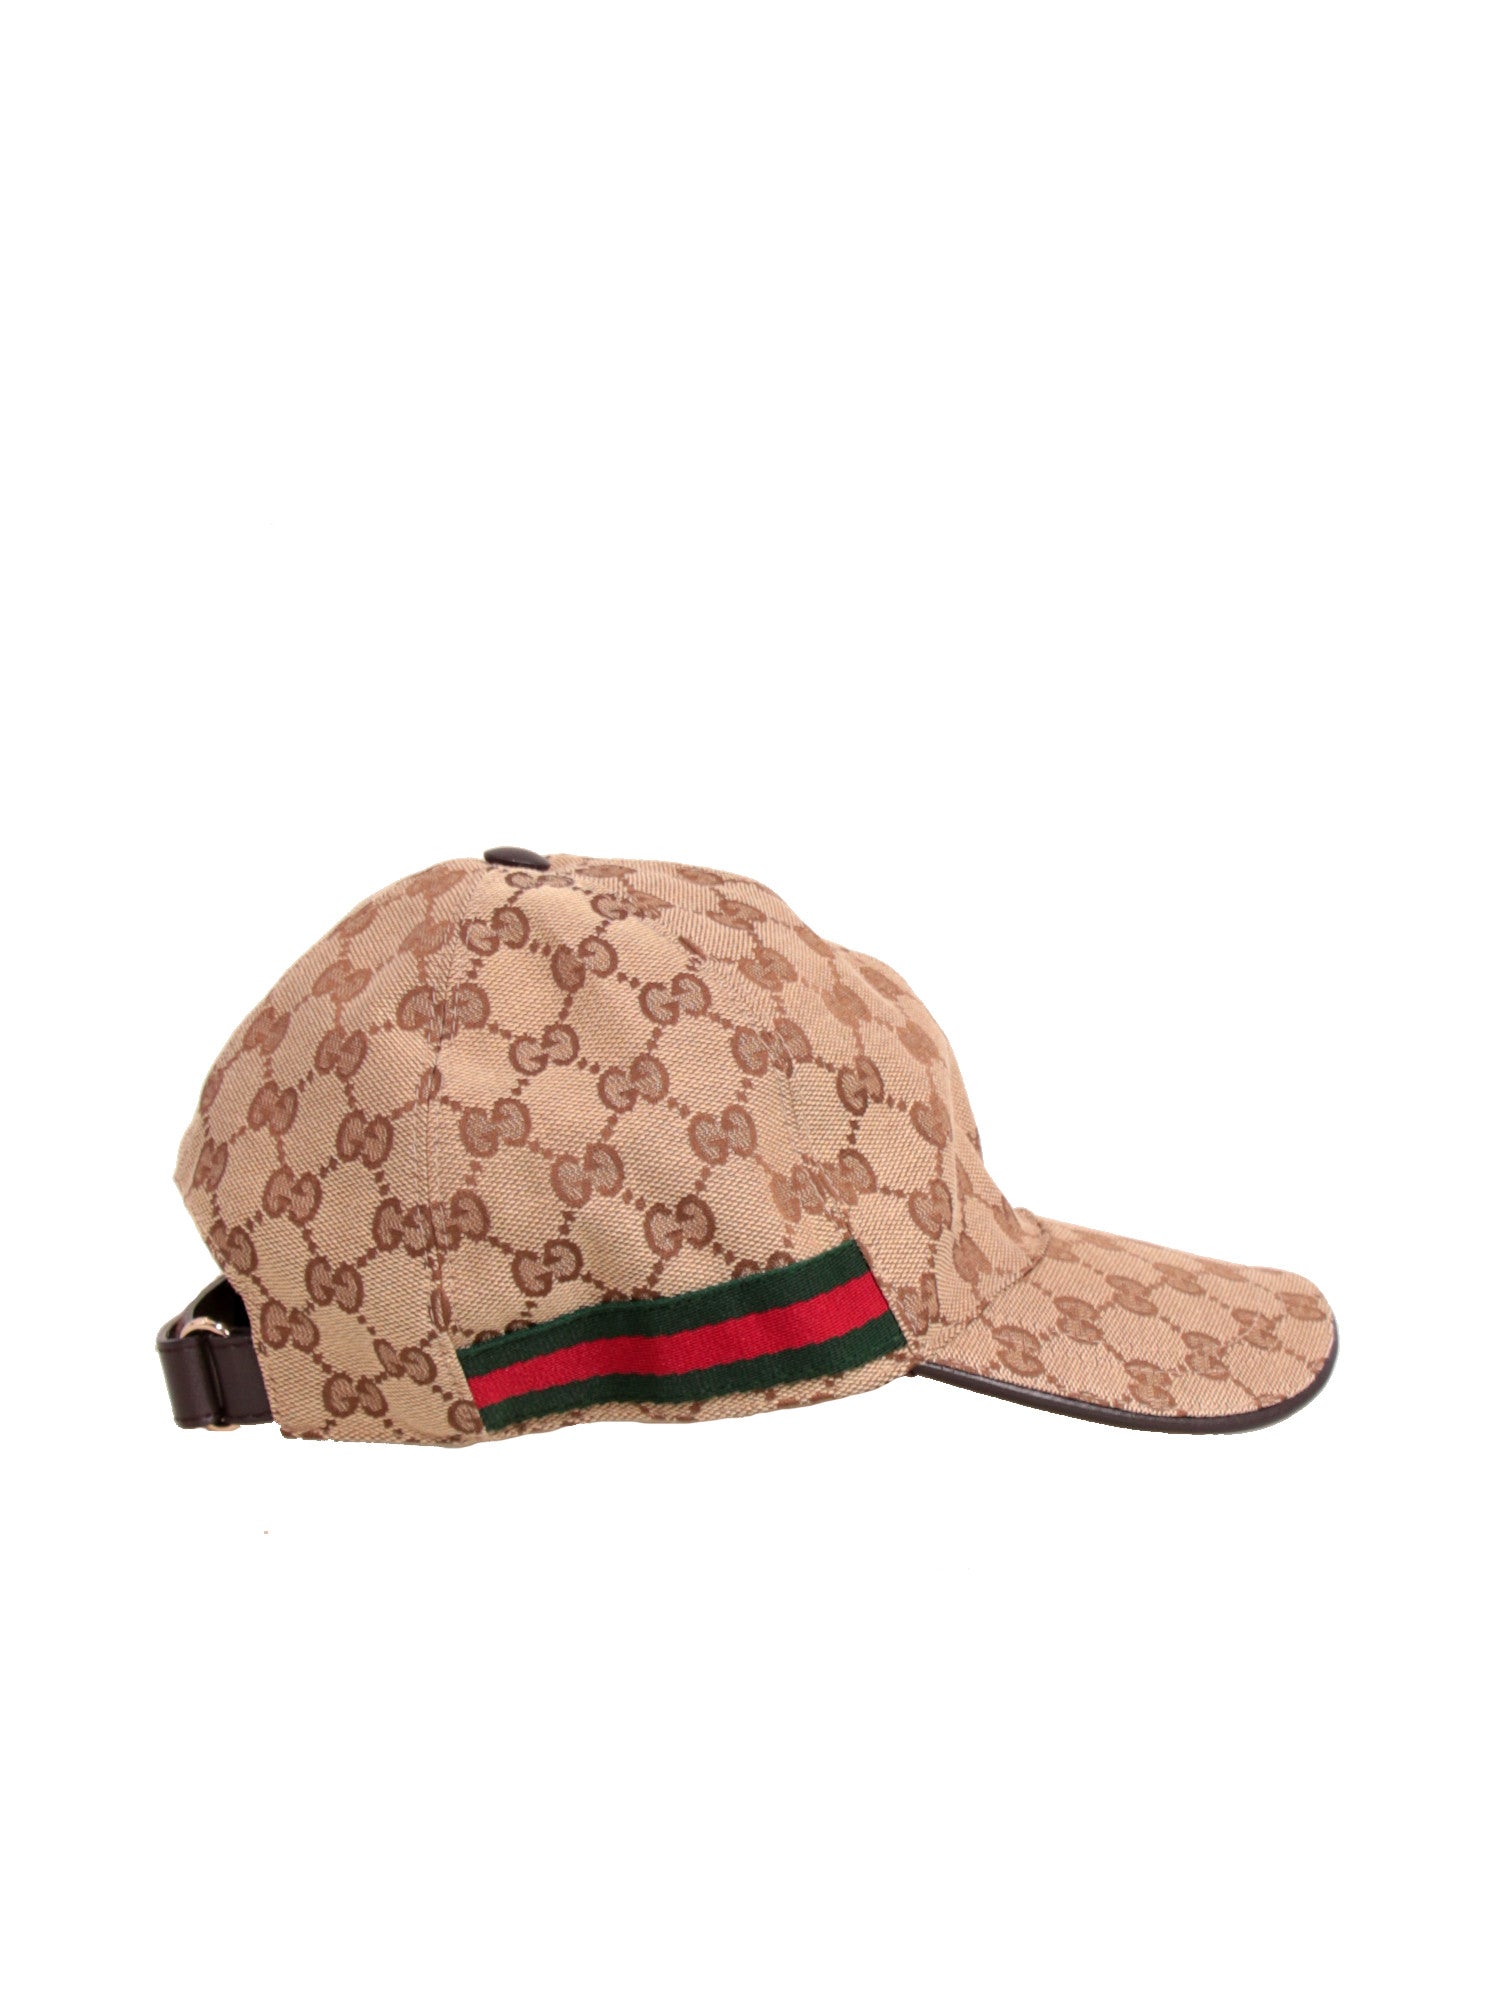 Gucci GG Canvas Baseball Cap - Brown Hats, Accessories